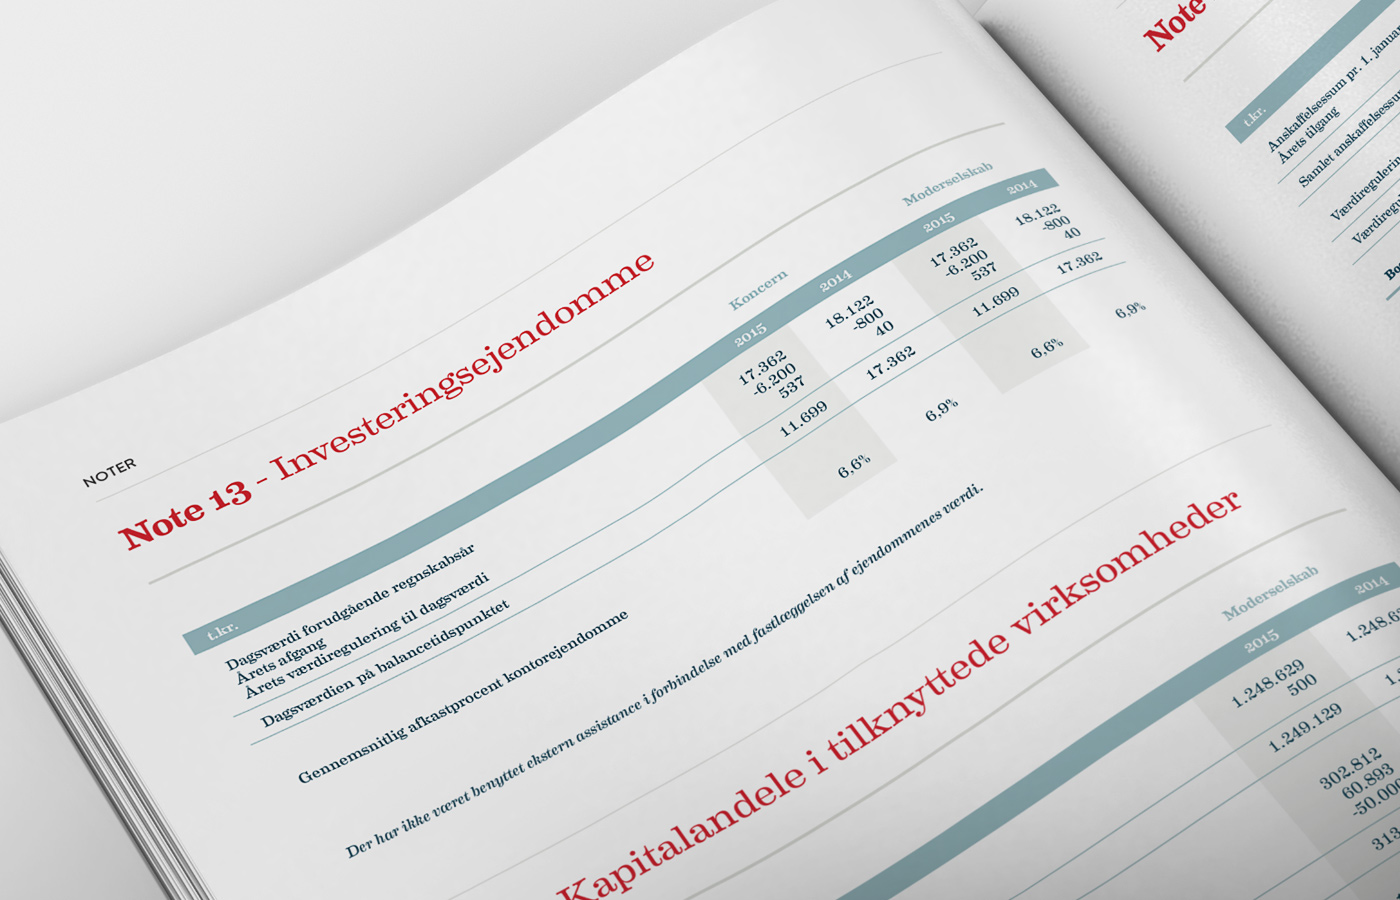 ANNUAL report insurance danish true customer Købstædernes Forsikring Kunder årsrapport